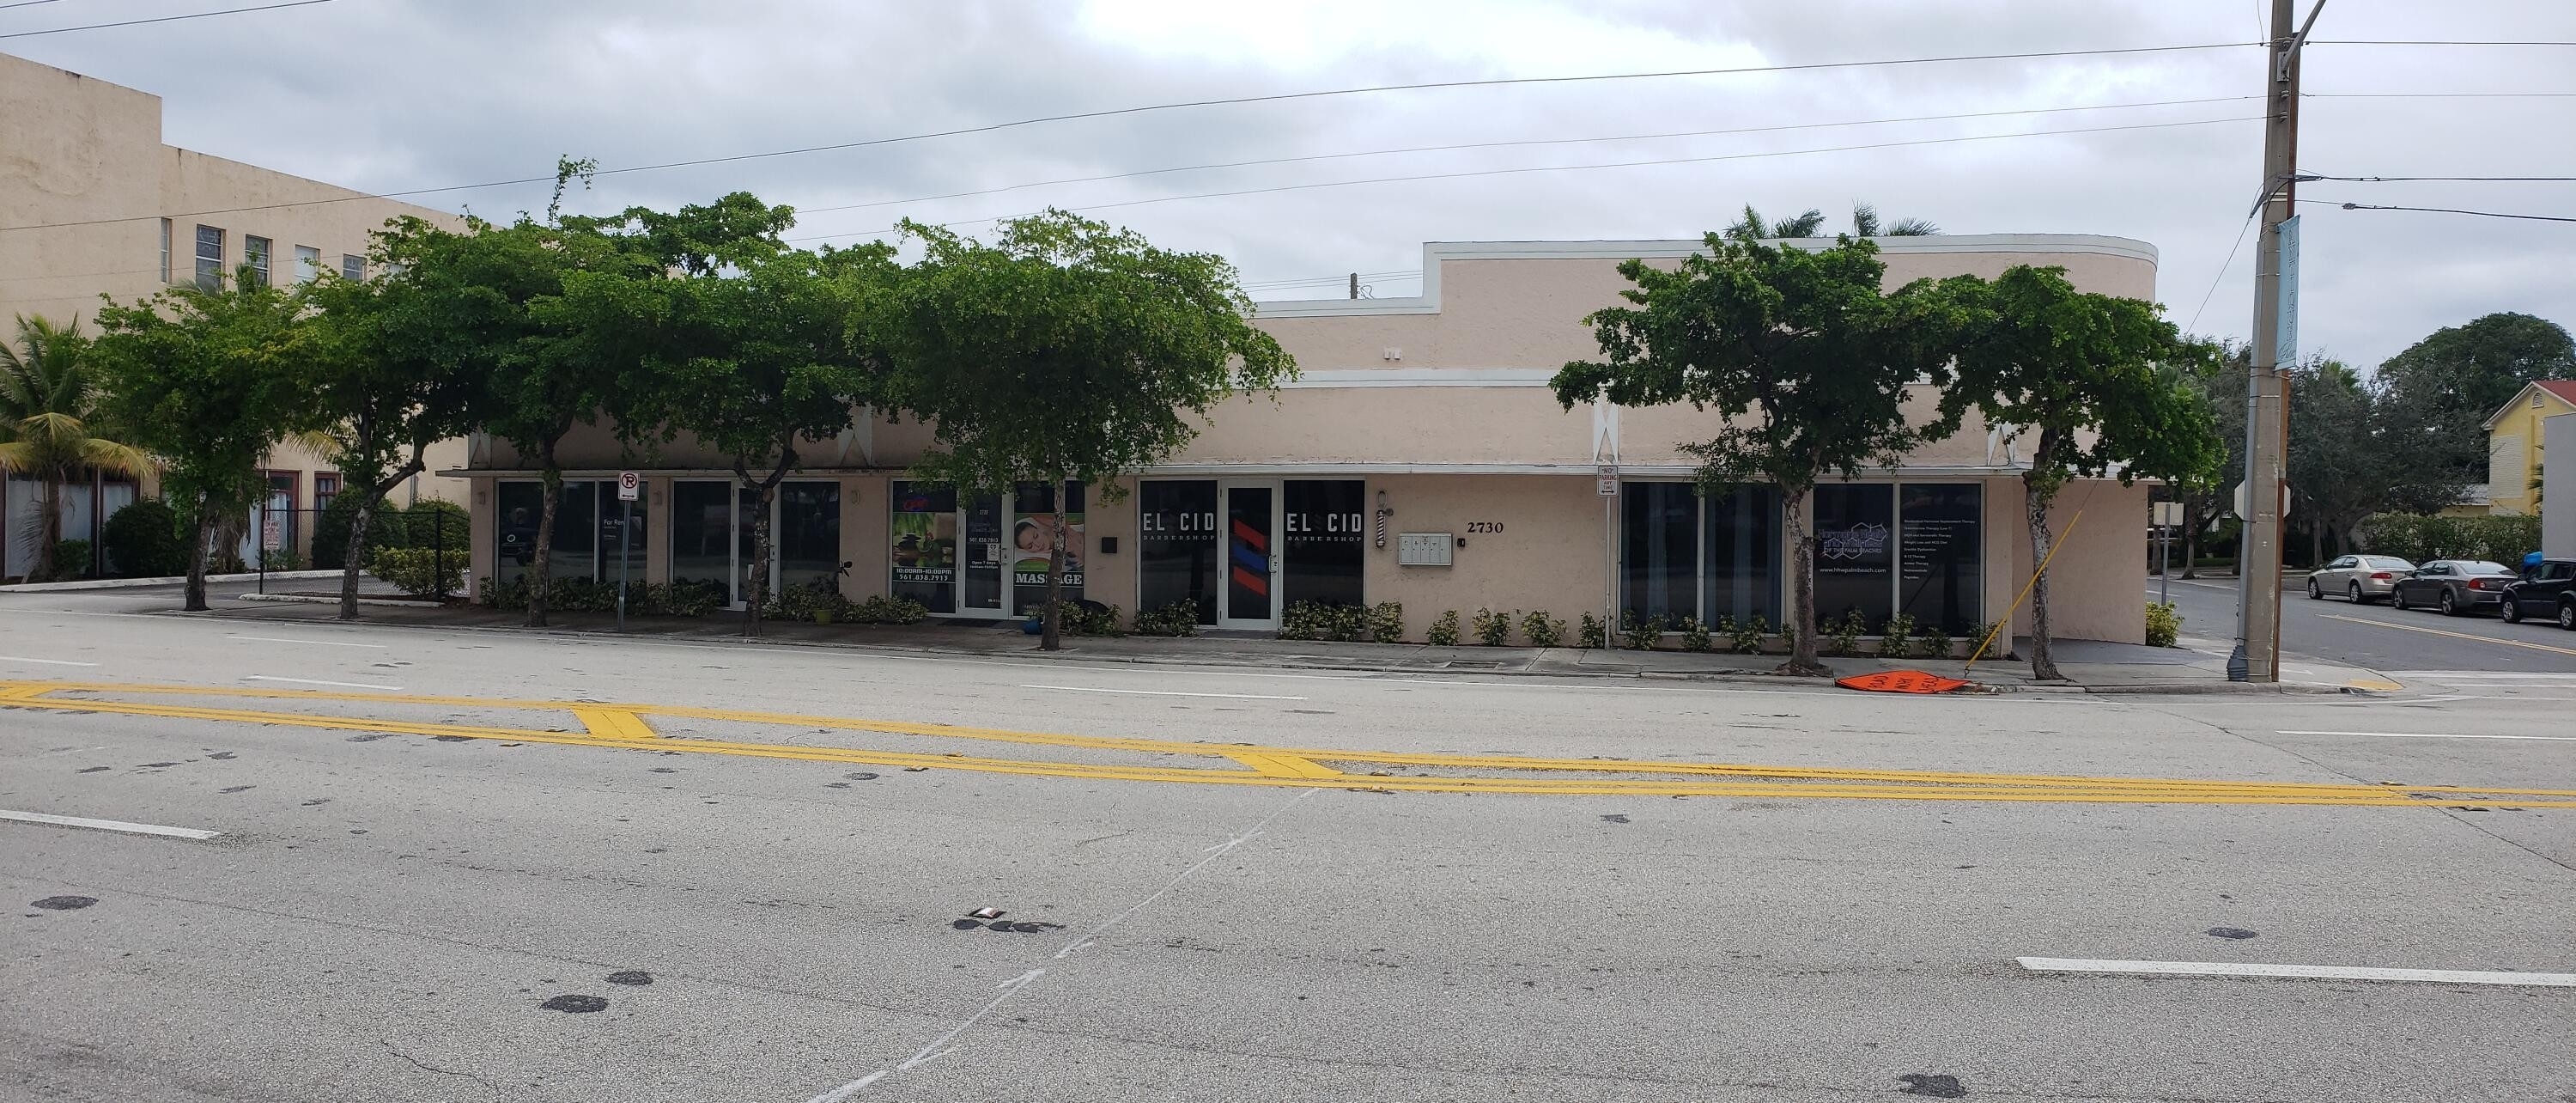 Retail Leases for Sale at El Cid, West Palm Beach, FL 33405